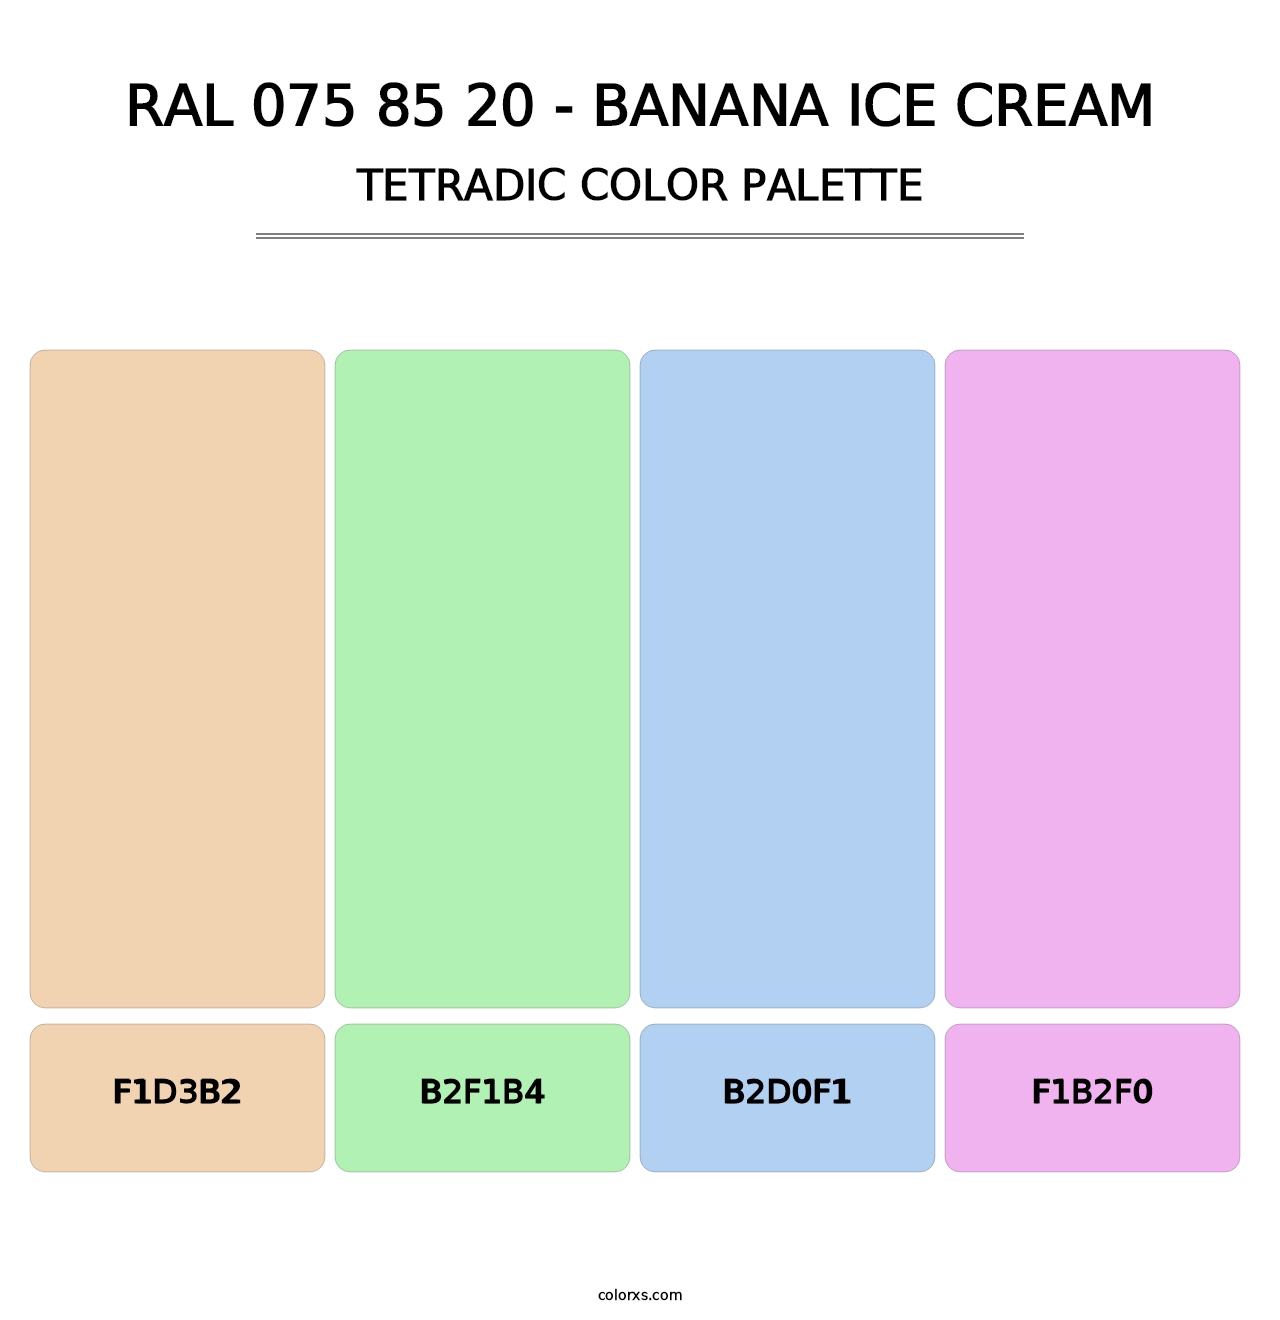 RAL 075 85 20 - Banana Ice Cream - Tetradic Color Palette